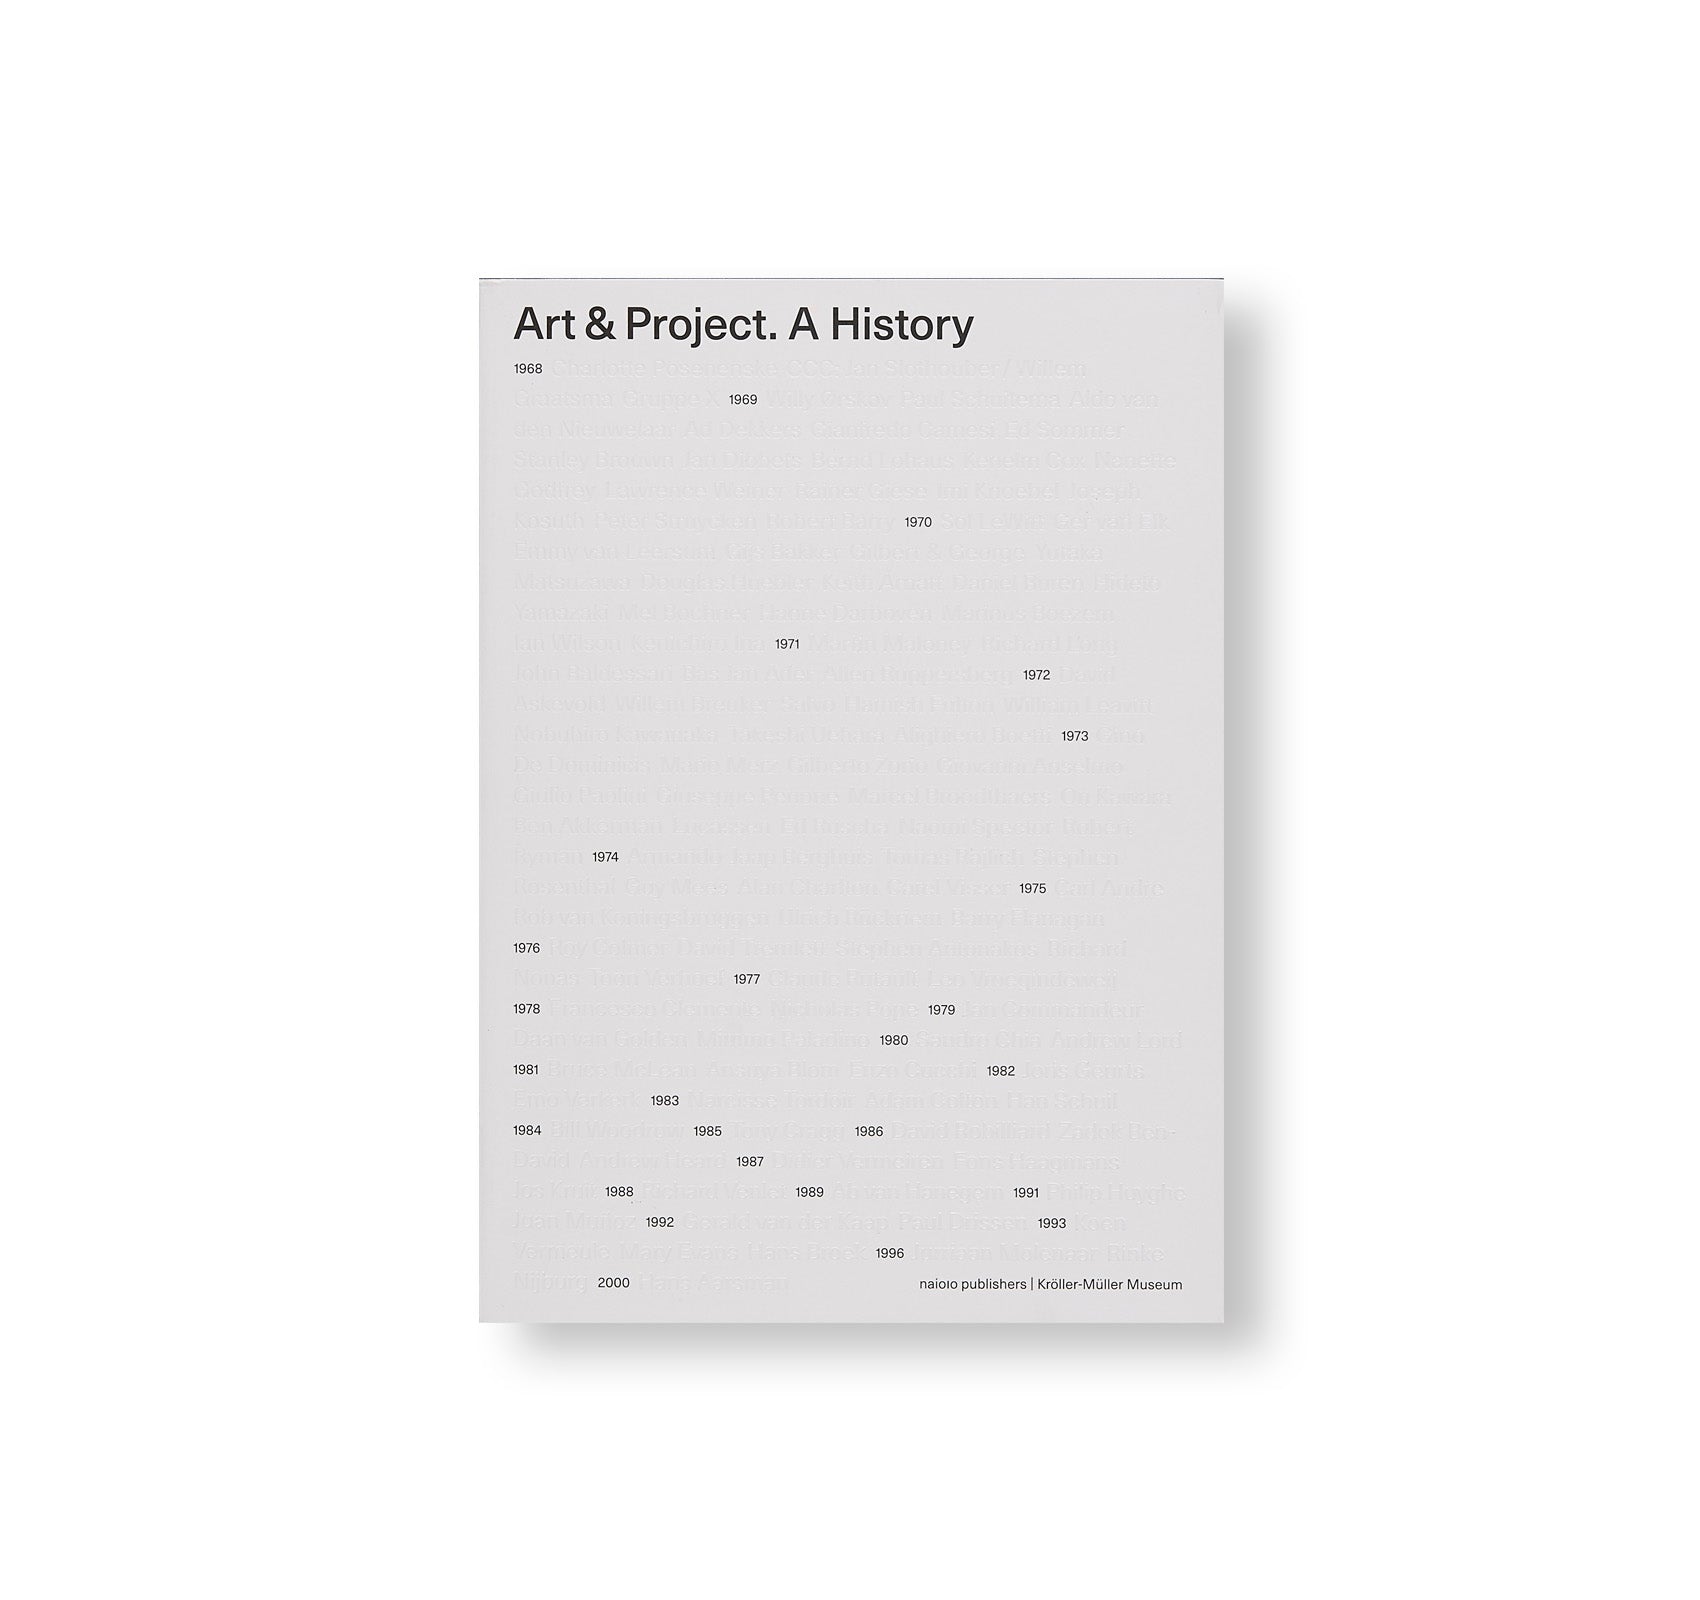 ART & PROJECT. A HISTORY